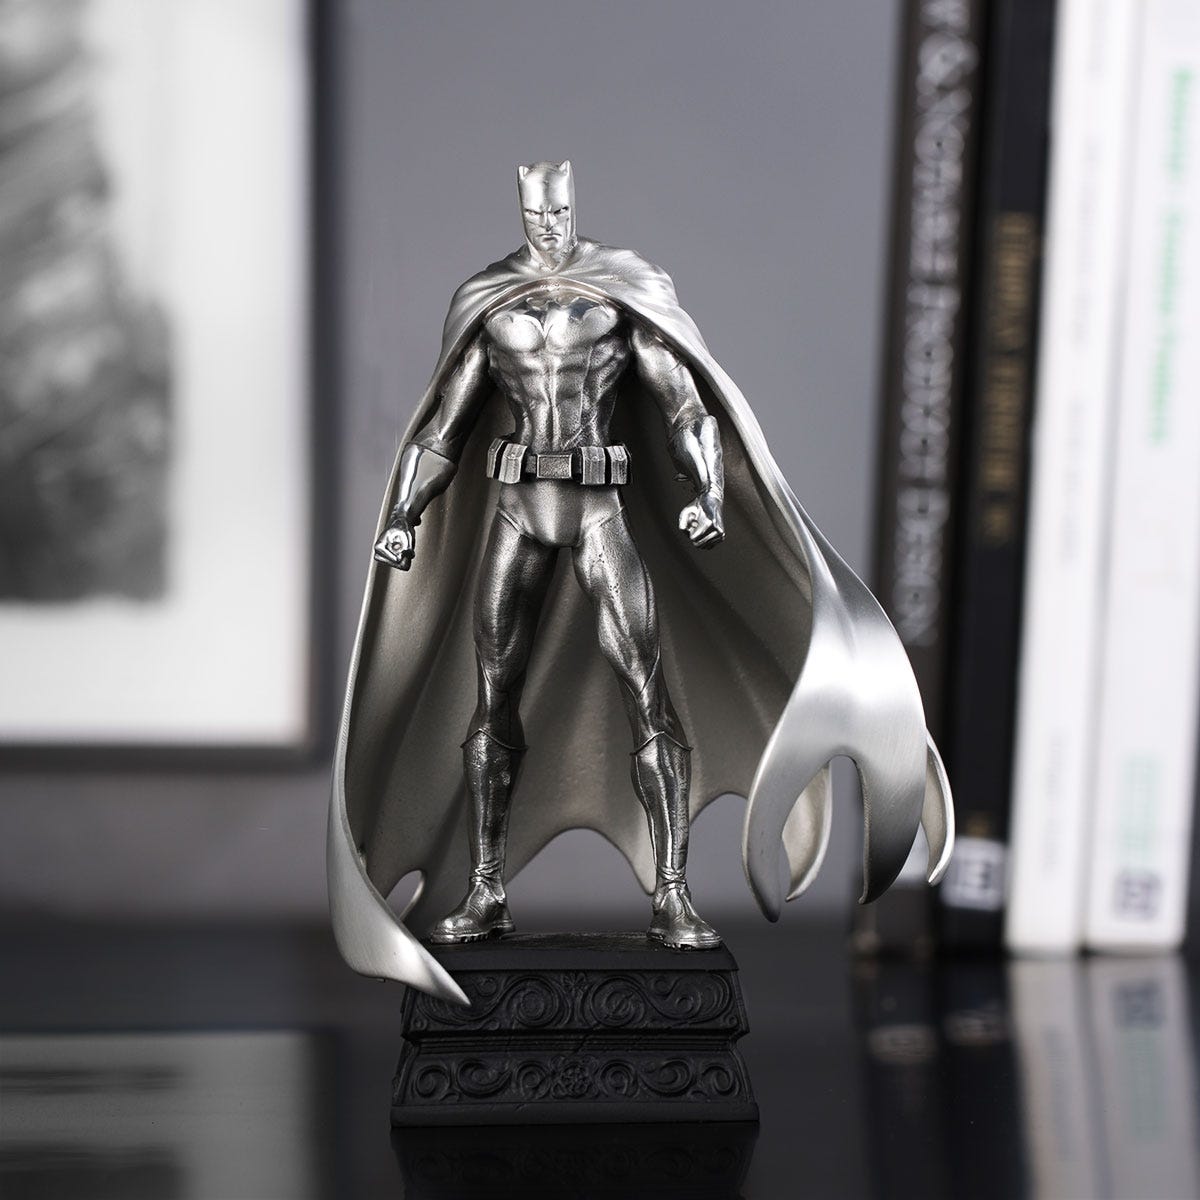 Royal Selangor DC Batman Resolute Figurine - Pewter - Notbrand